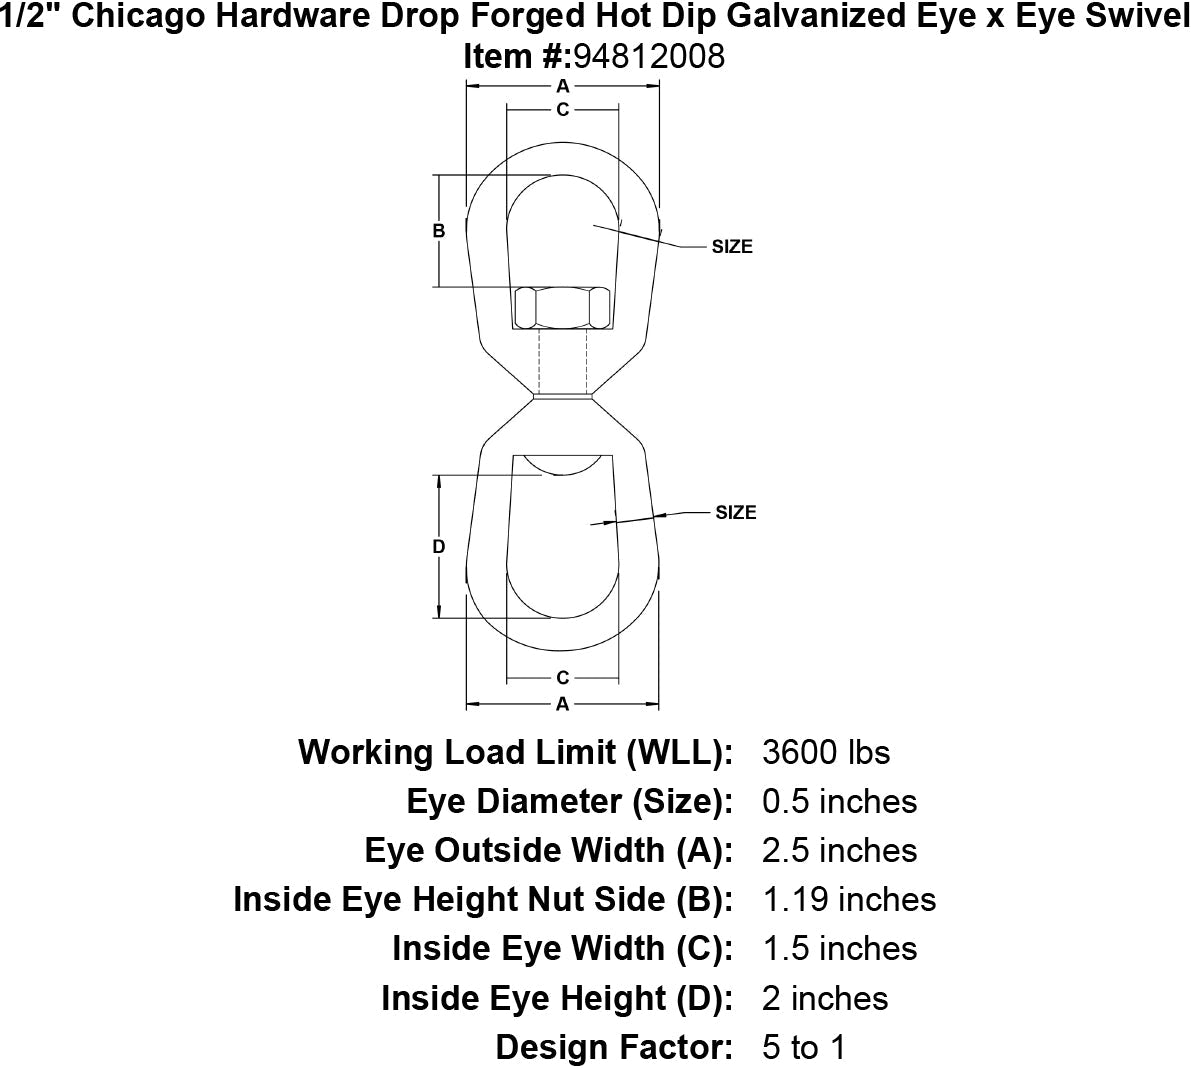 Chicago Hardware Drop Forged Hot Dip Galvanized Eye x Eye Swivels